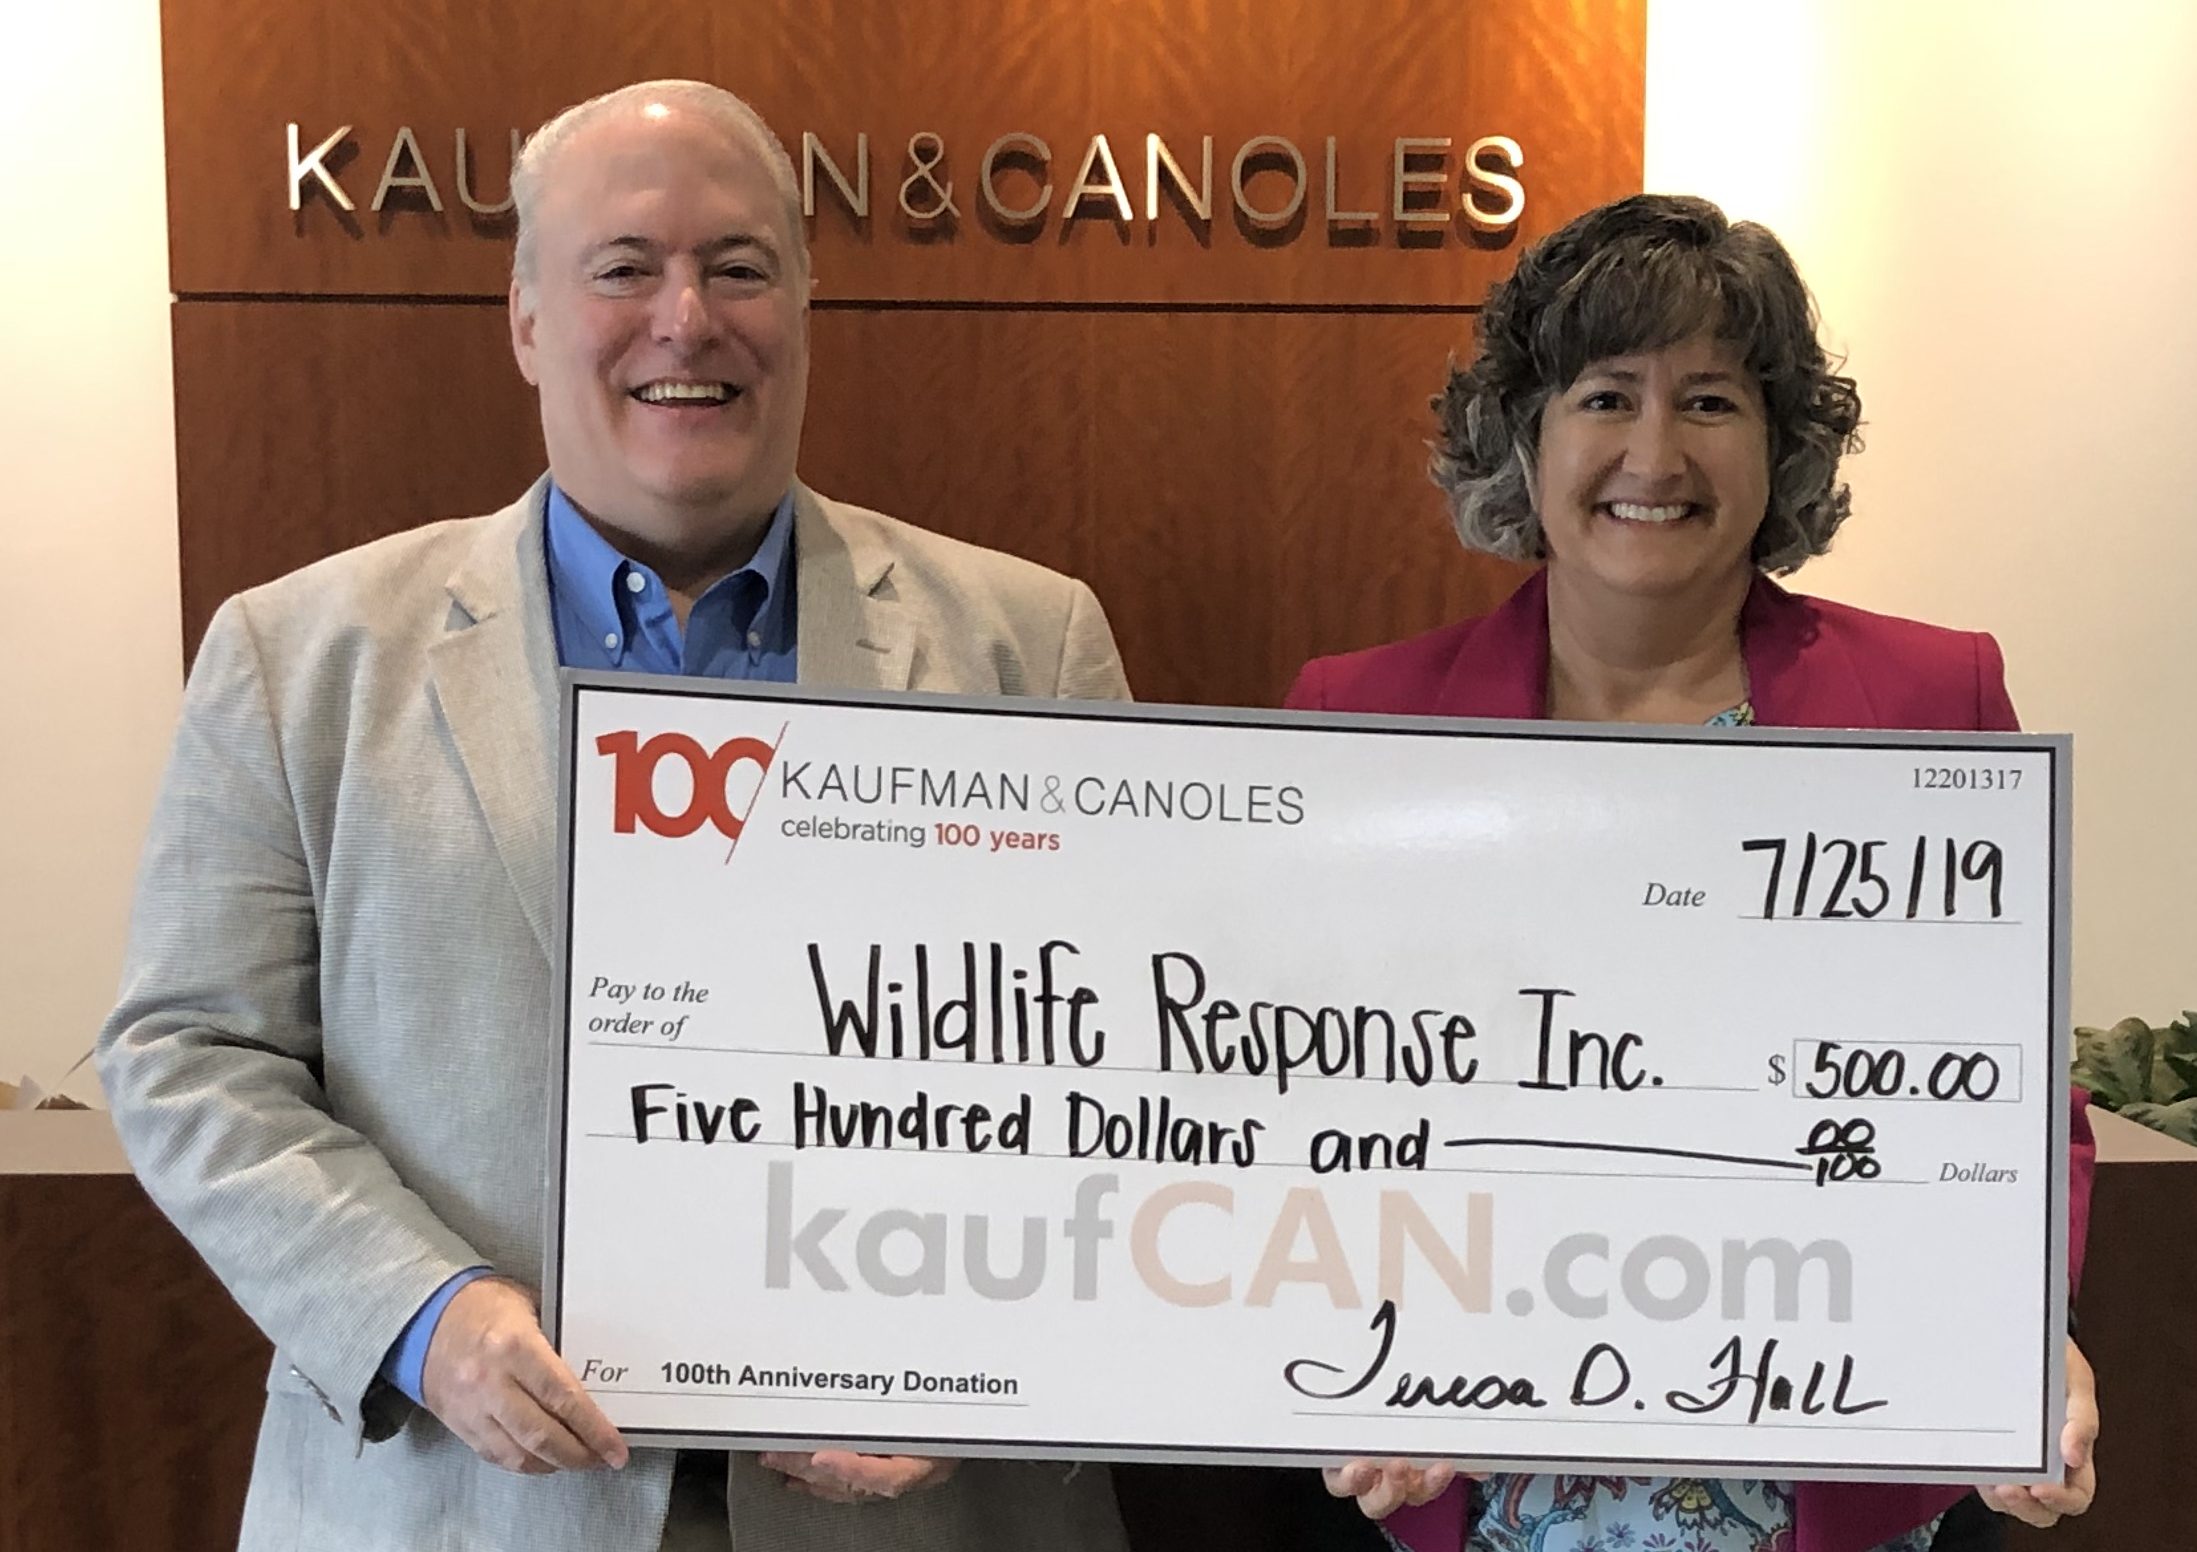 Kaufman & Canoles donates to Wildlife Response, Inc.